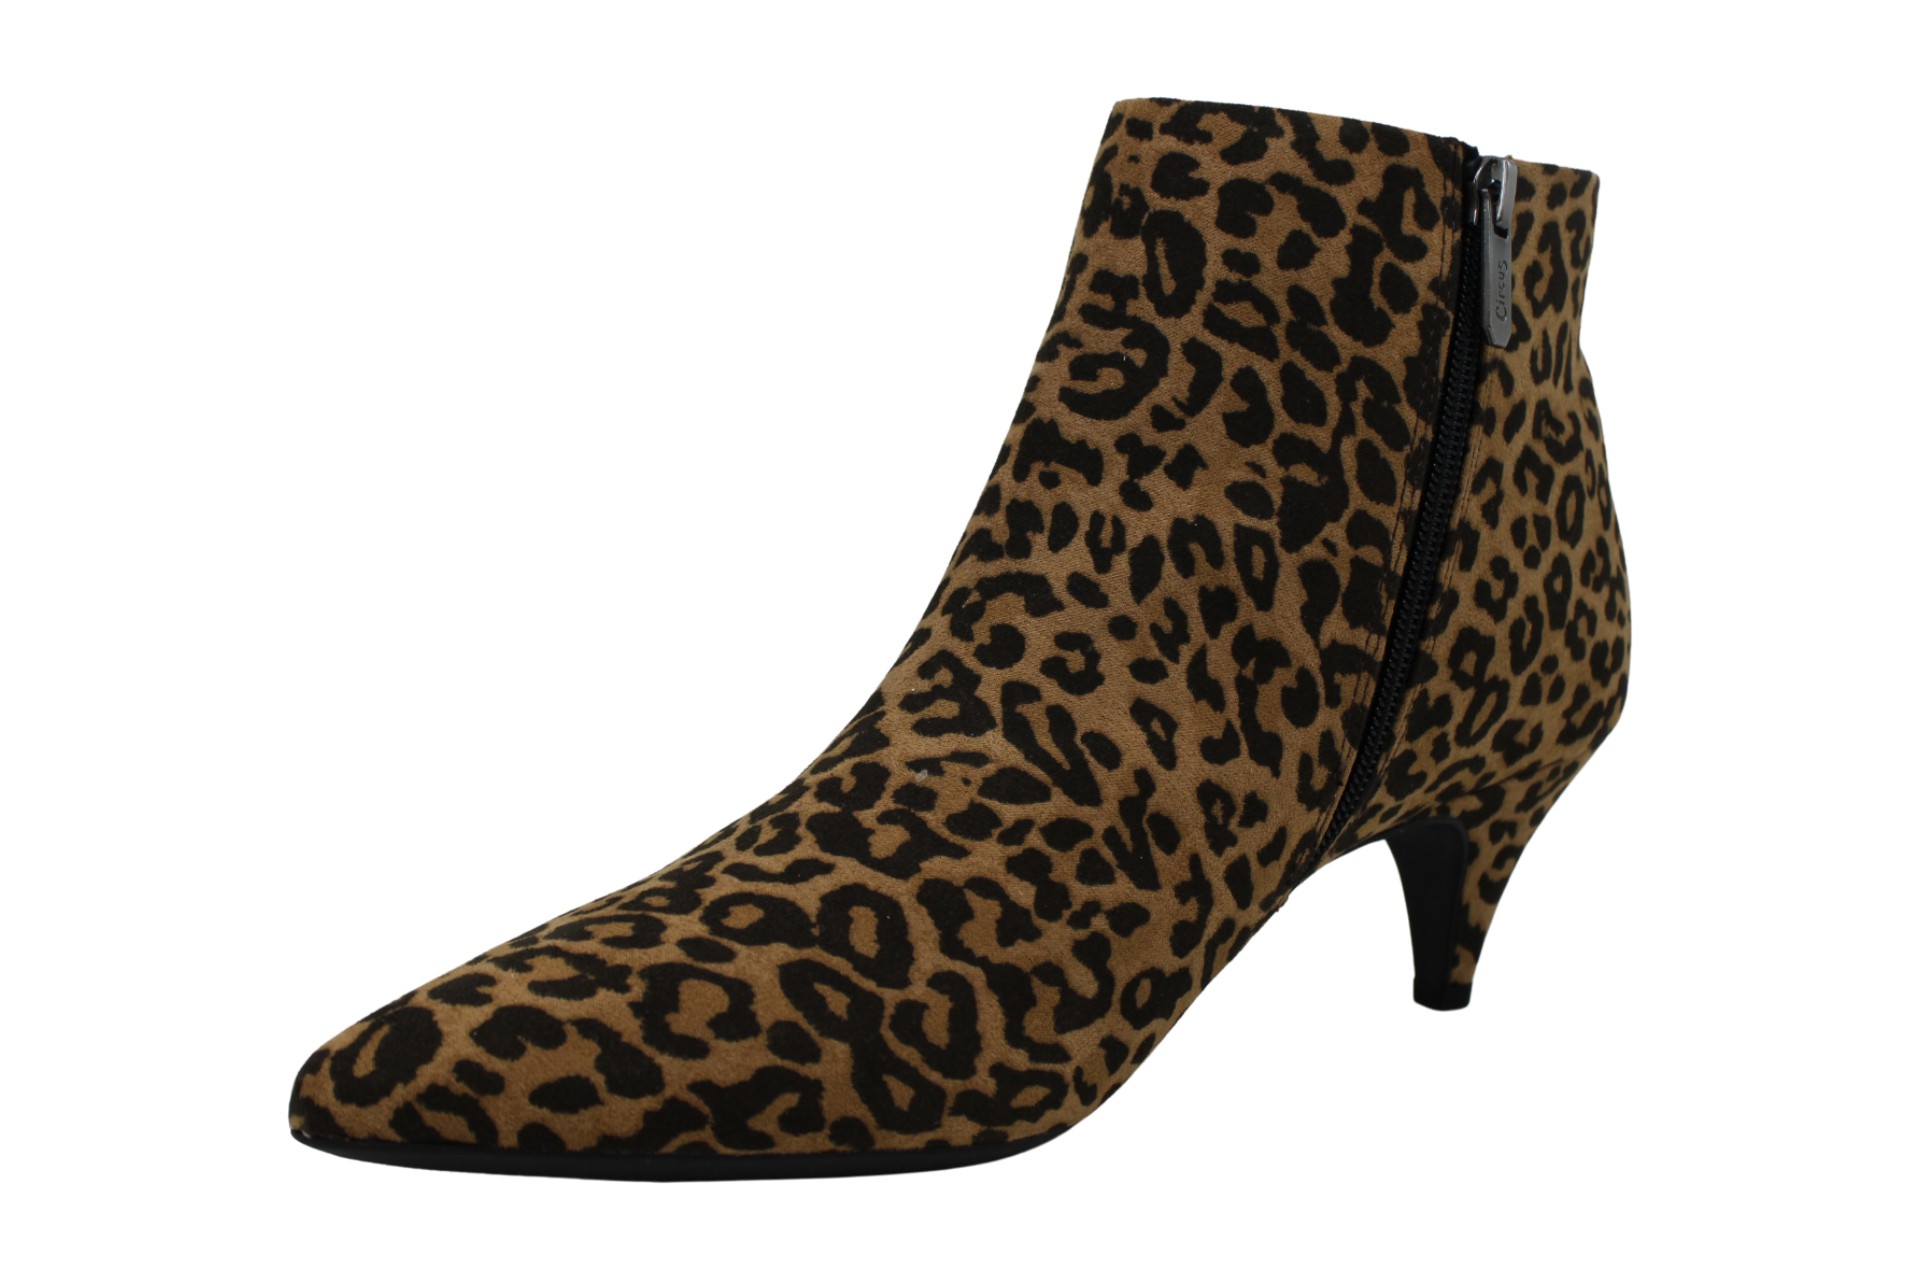 Circus by Sam Edelman Womens edelman Fabric Almond Toe Ankle Fashion Boots